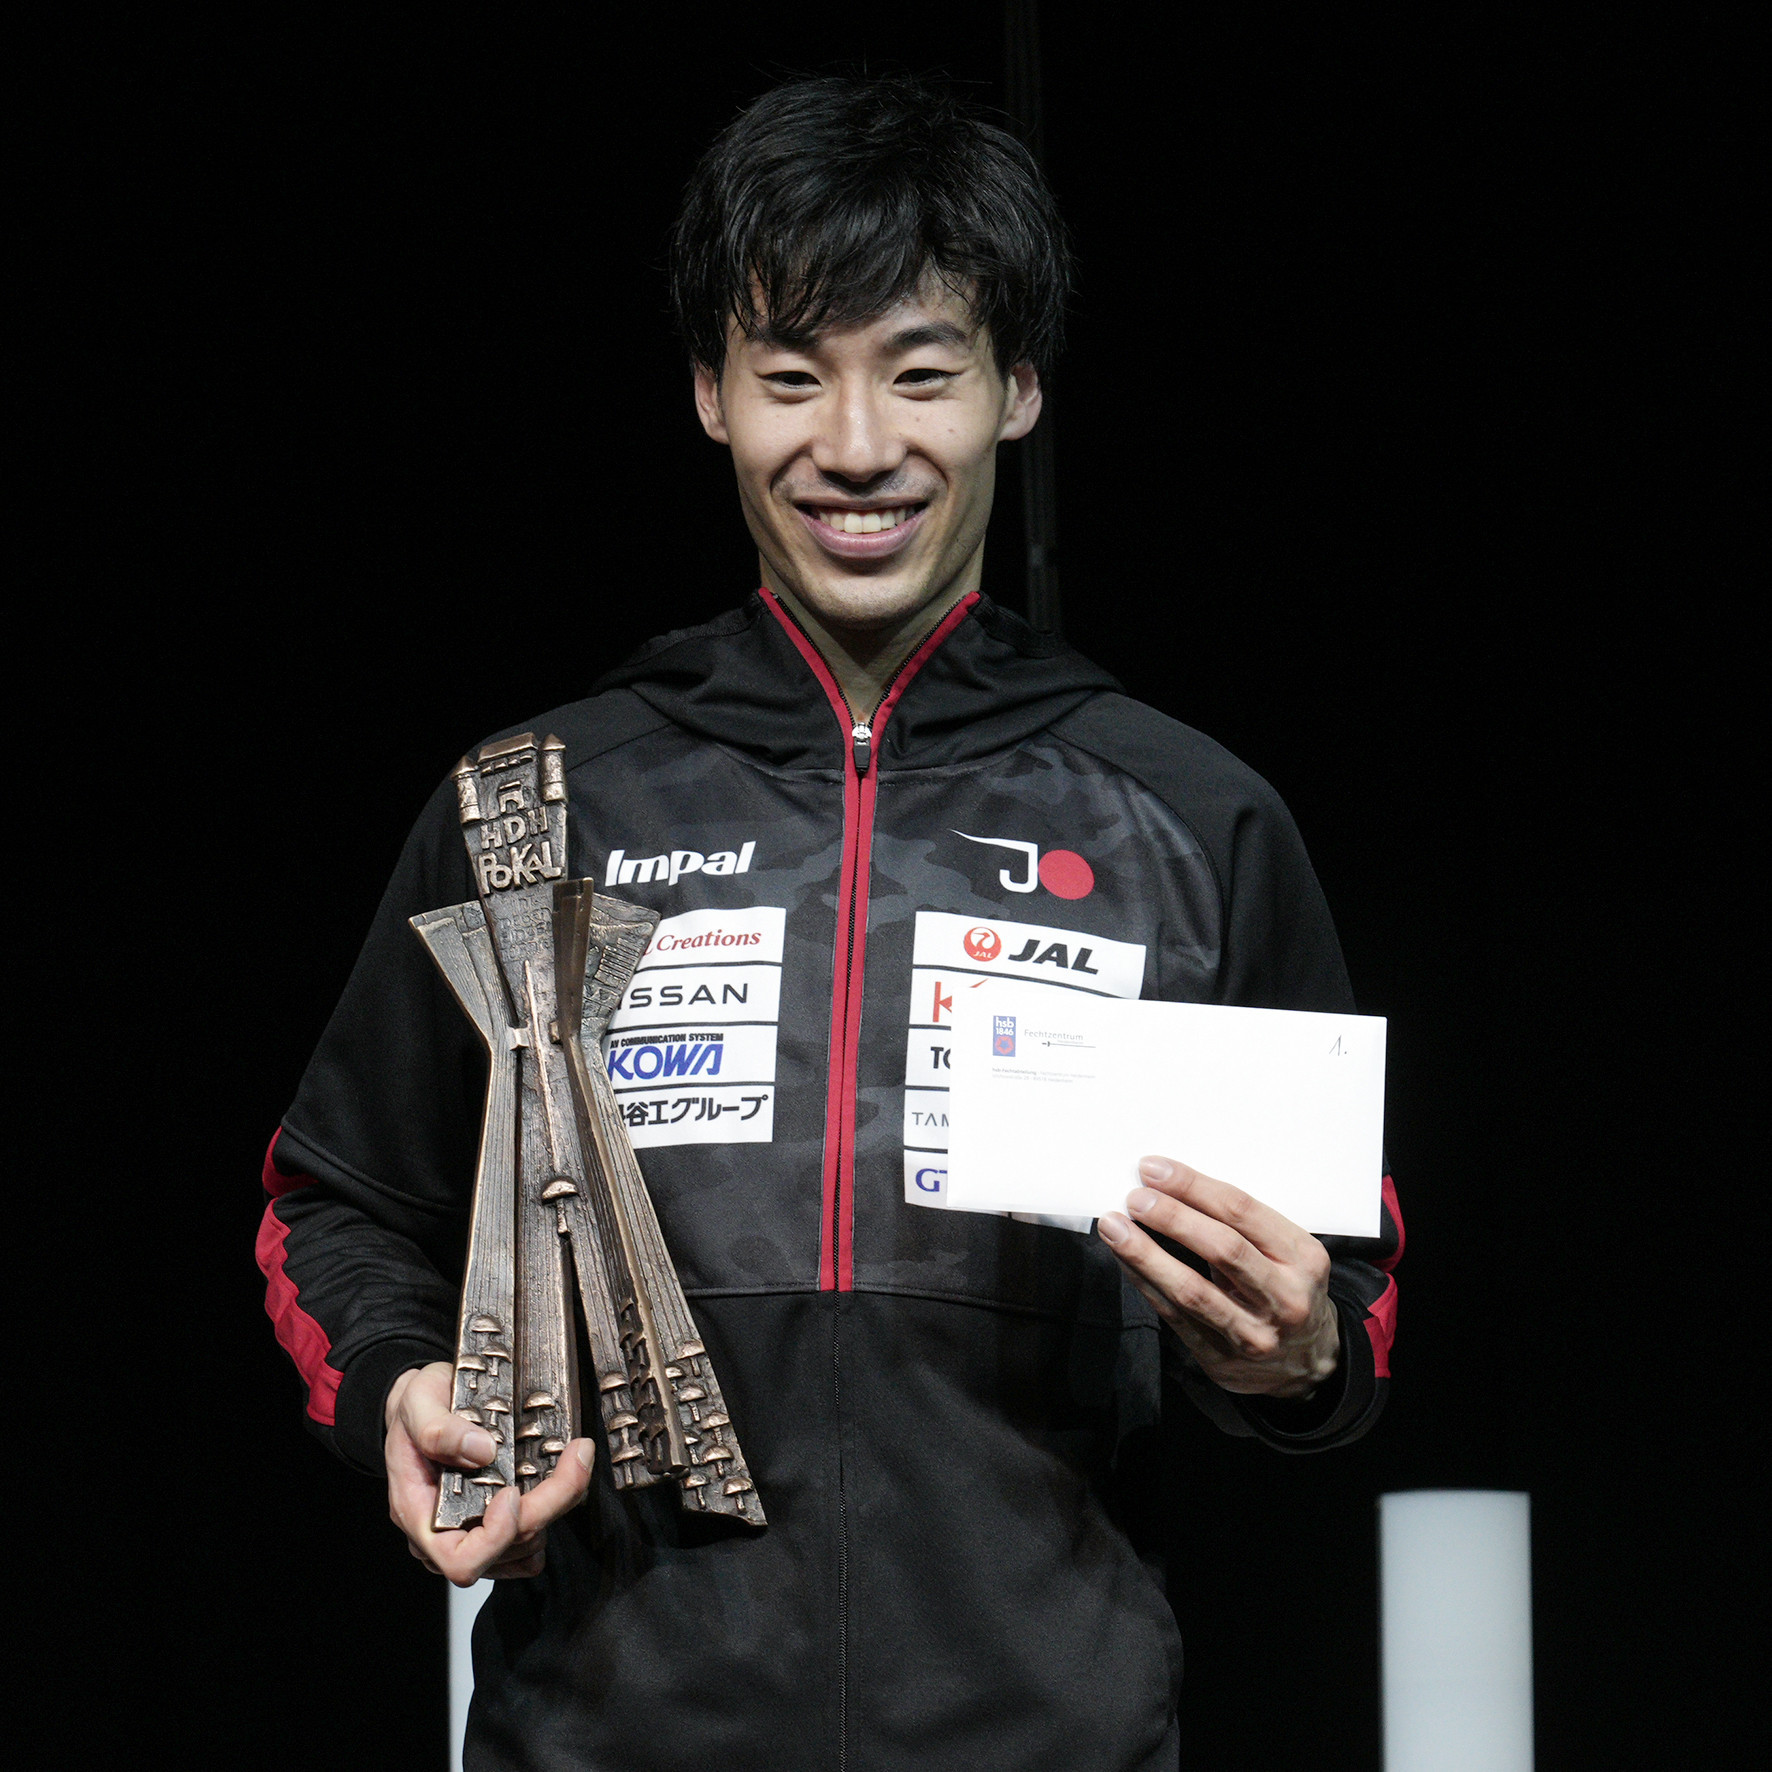 Olympic champion Koki Kano won the men's épée title today ©FIE